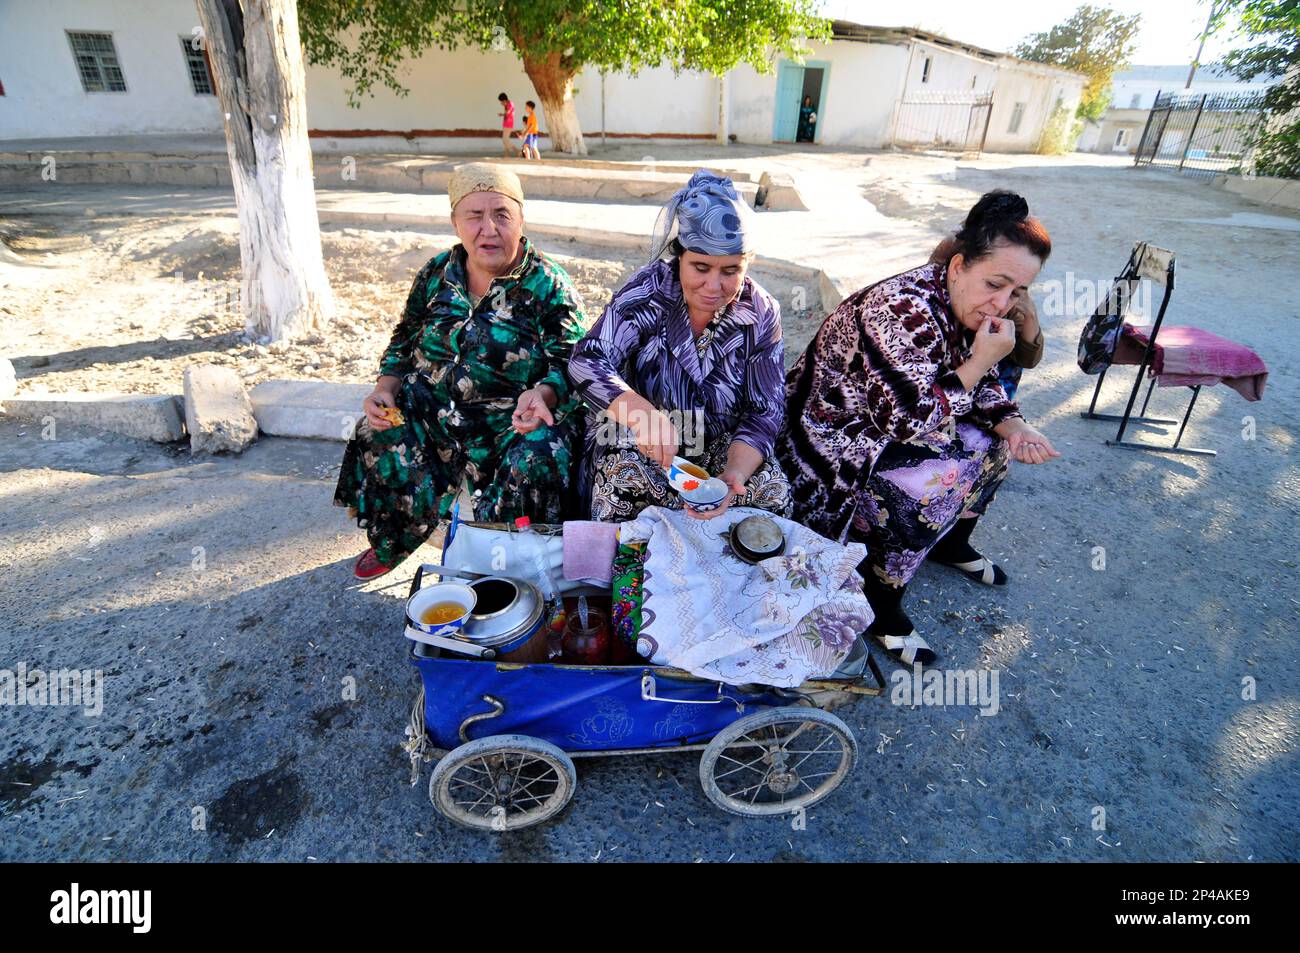 Uzbek women selling tea from an old vintage baby carriage in Bukhara, Uzbekistan. Stock Photo